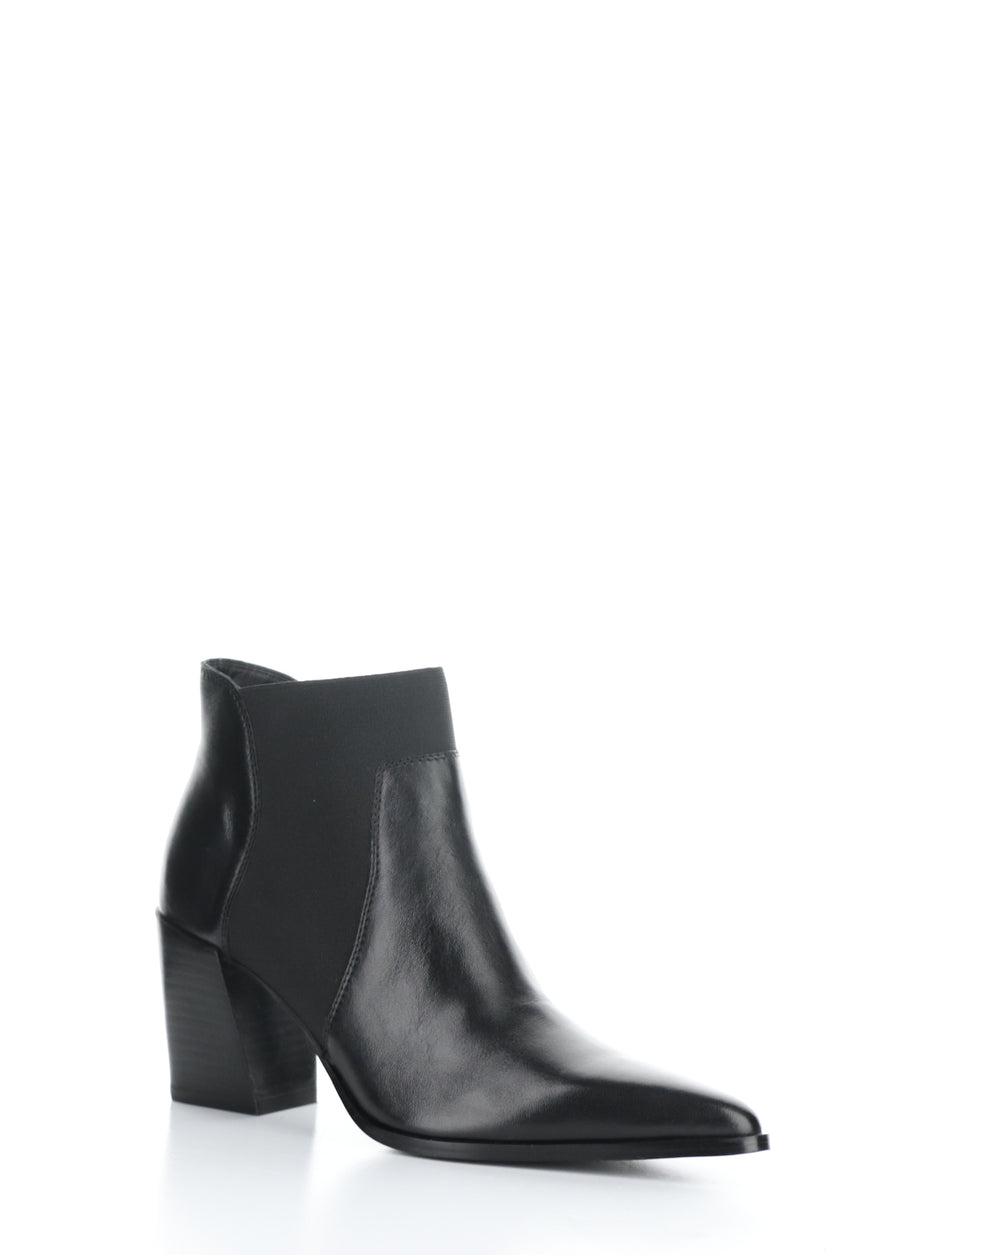 TALLIS BLACK Pointed Toe Boots